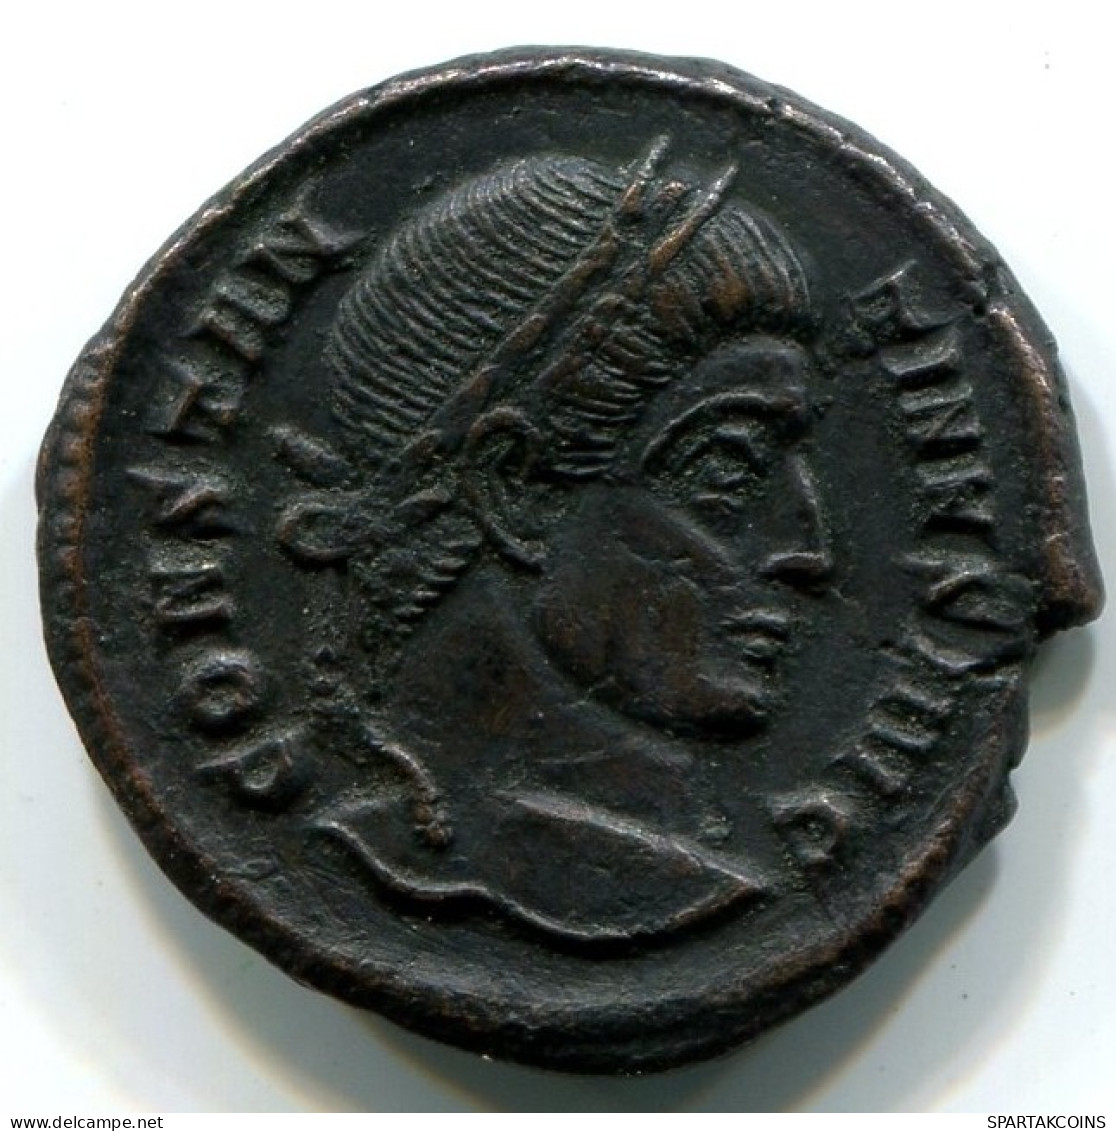 CONSTANTINE I Ticinum Mint ST AD 320-321 D N CONSTANTINI MAX AVG #ANC12447.16.E.A - The Christian Empire (307 AD To 363 AD)